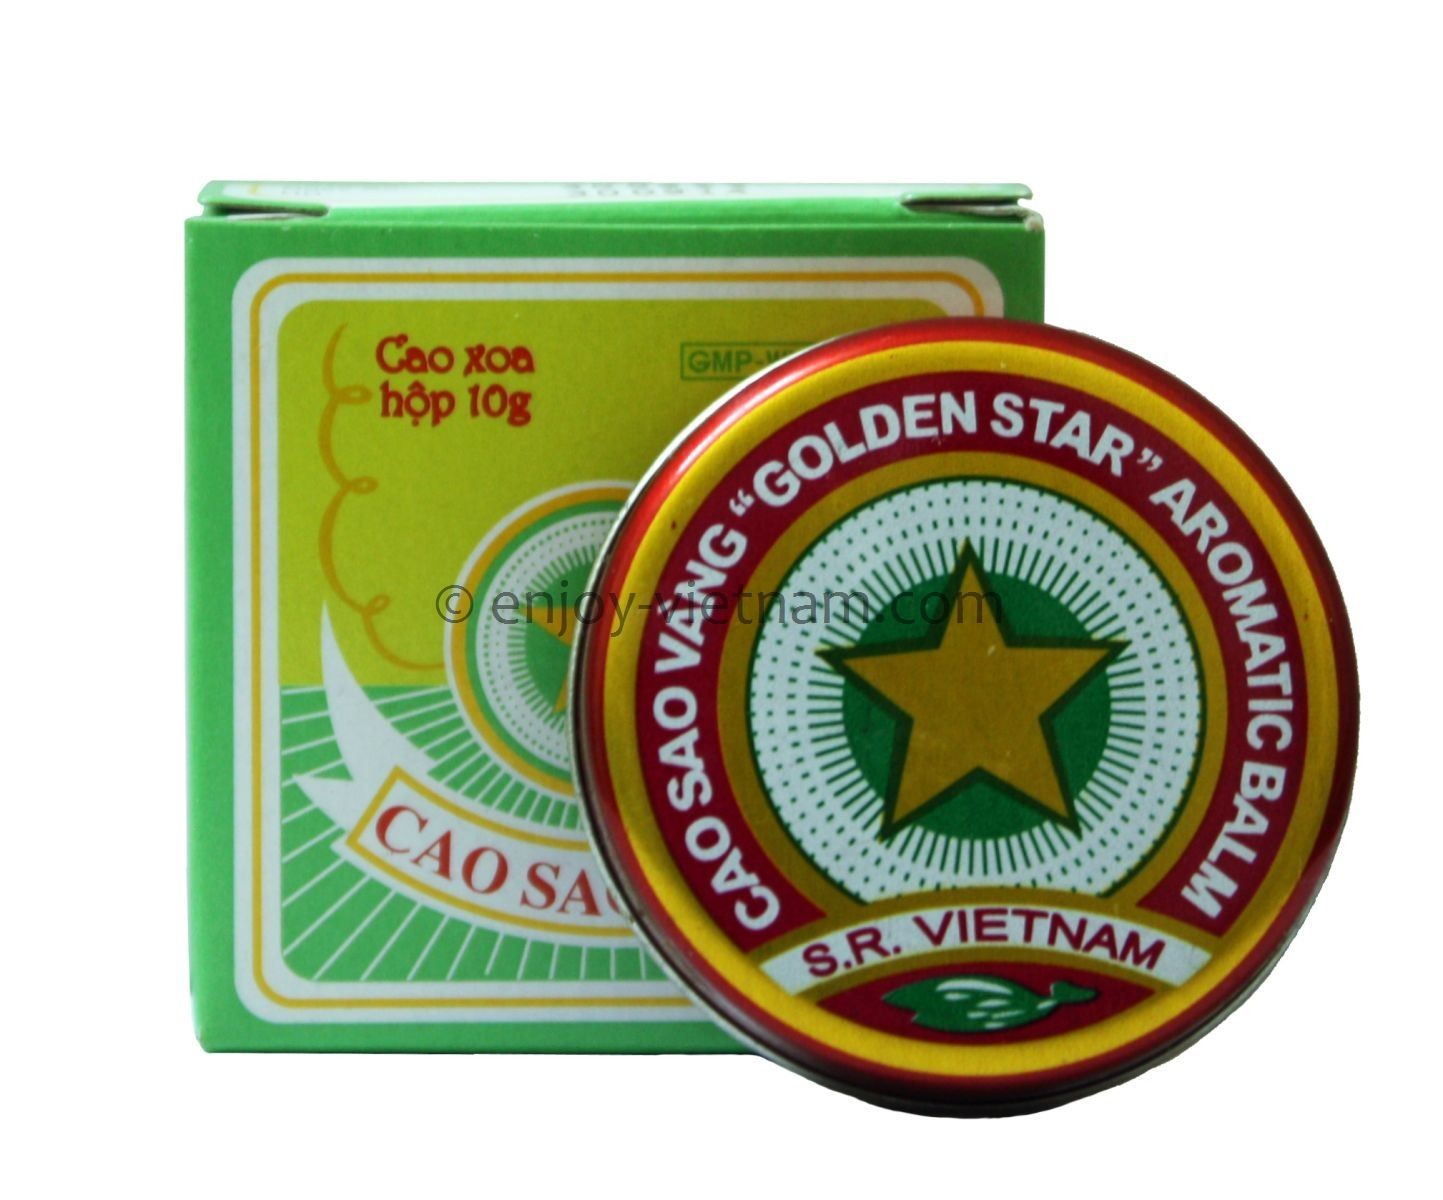 golden star aromatic balm